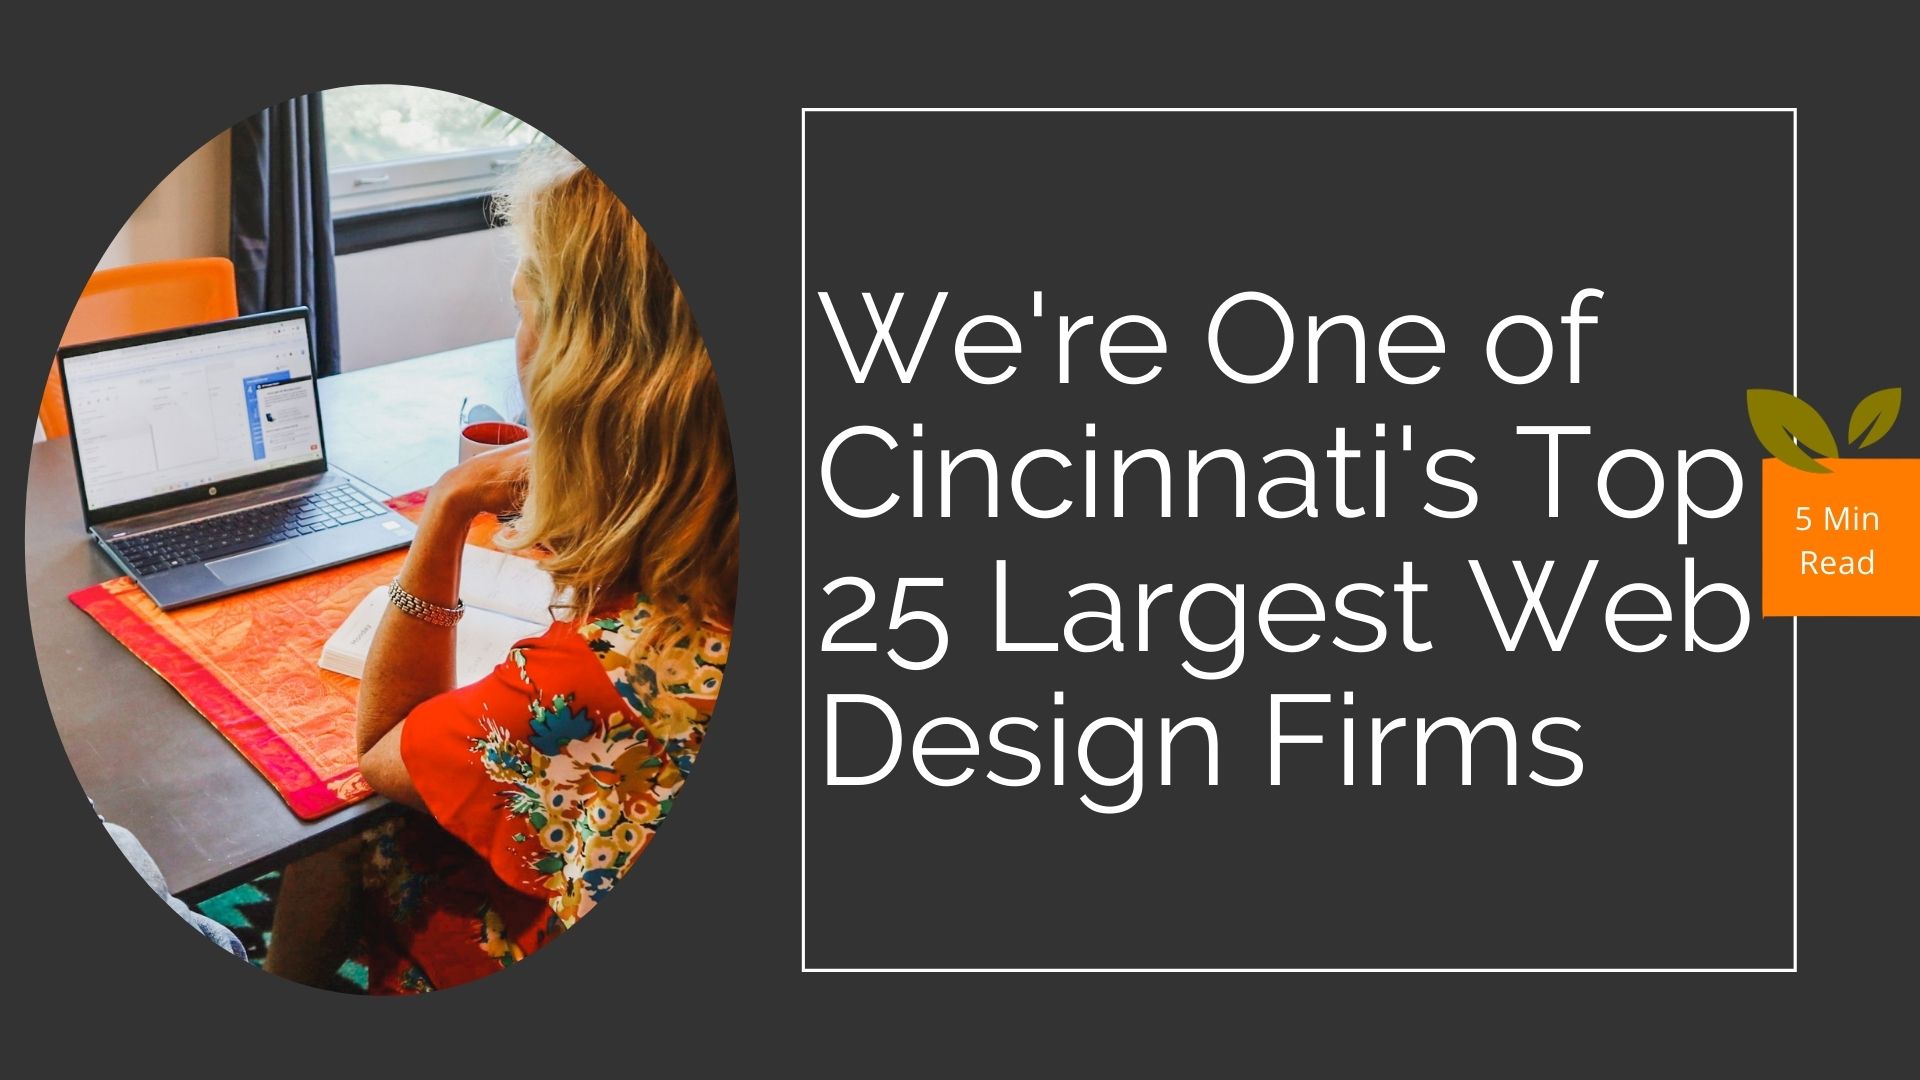 BigOrange Marketing is named one of Cincinnati's Top 25 Largest Web Design Firms